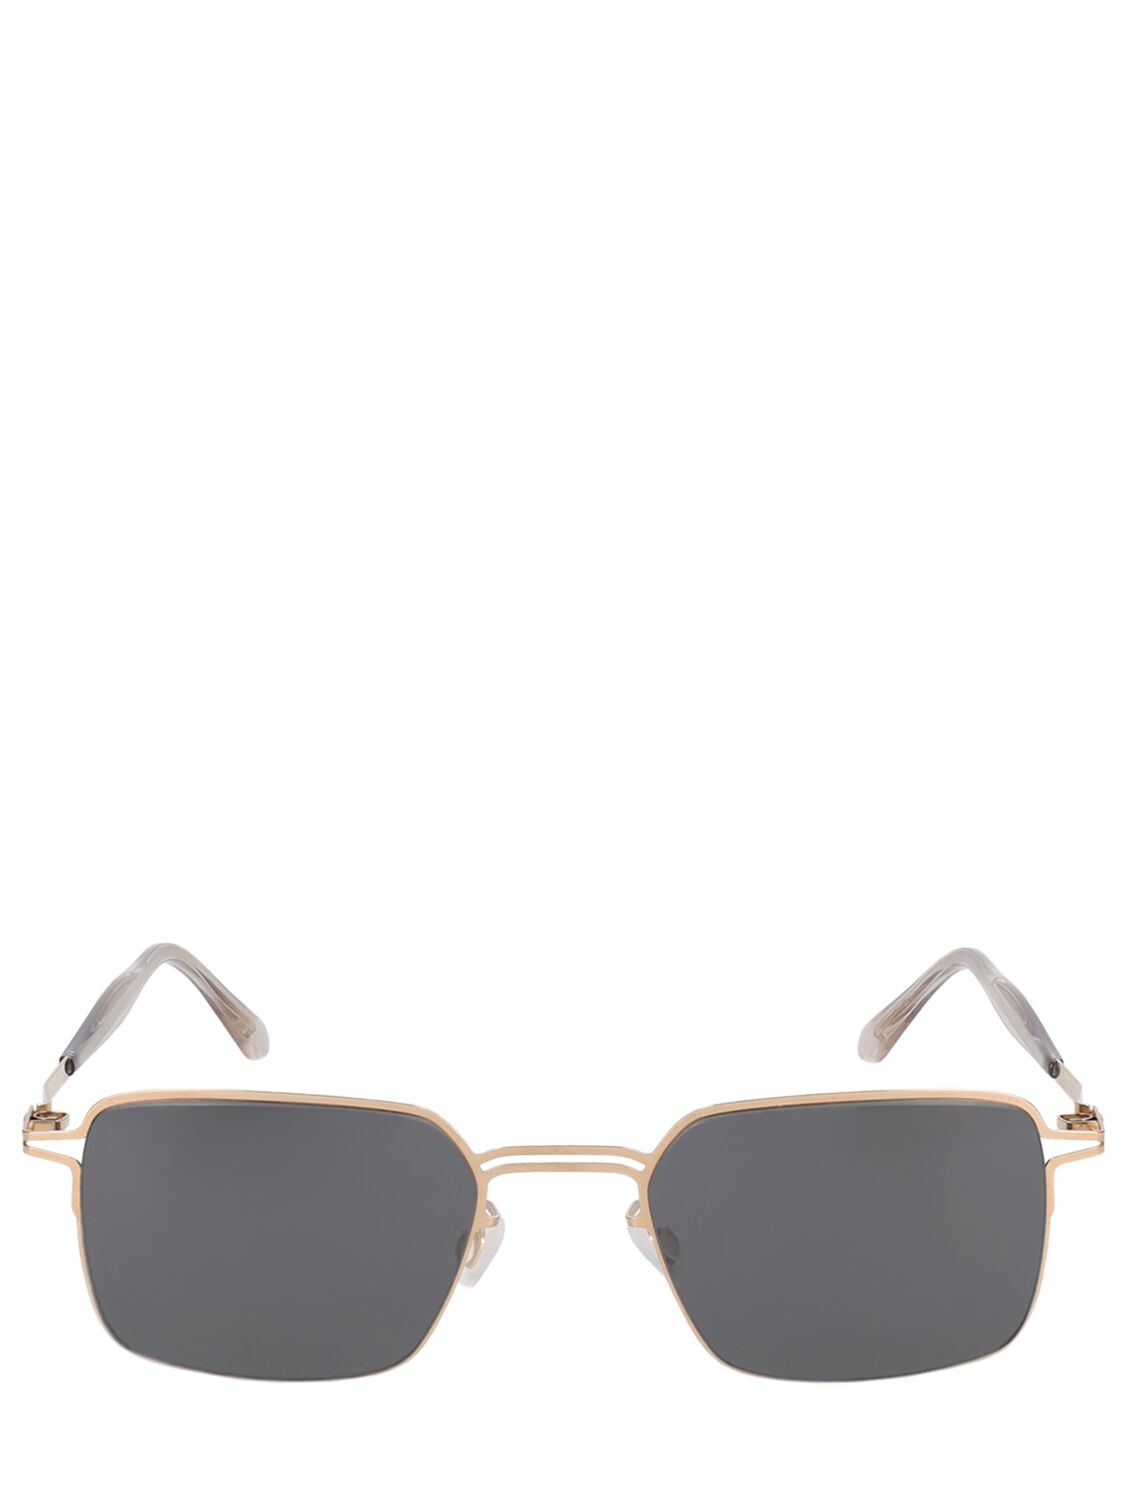 Mykita Alcott Sunglasses In Gray